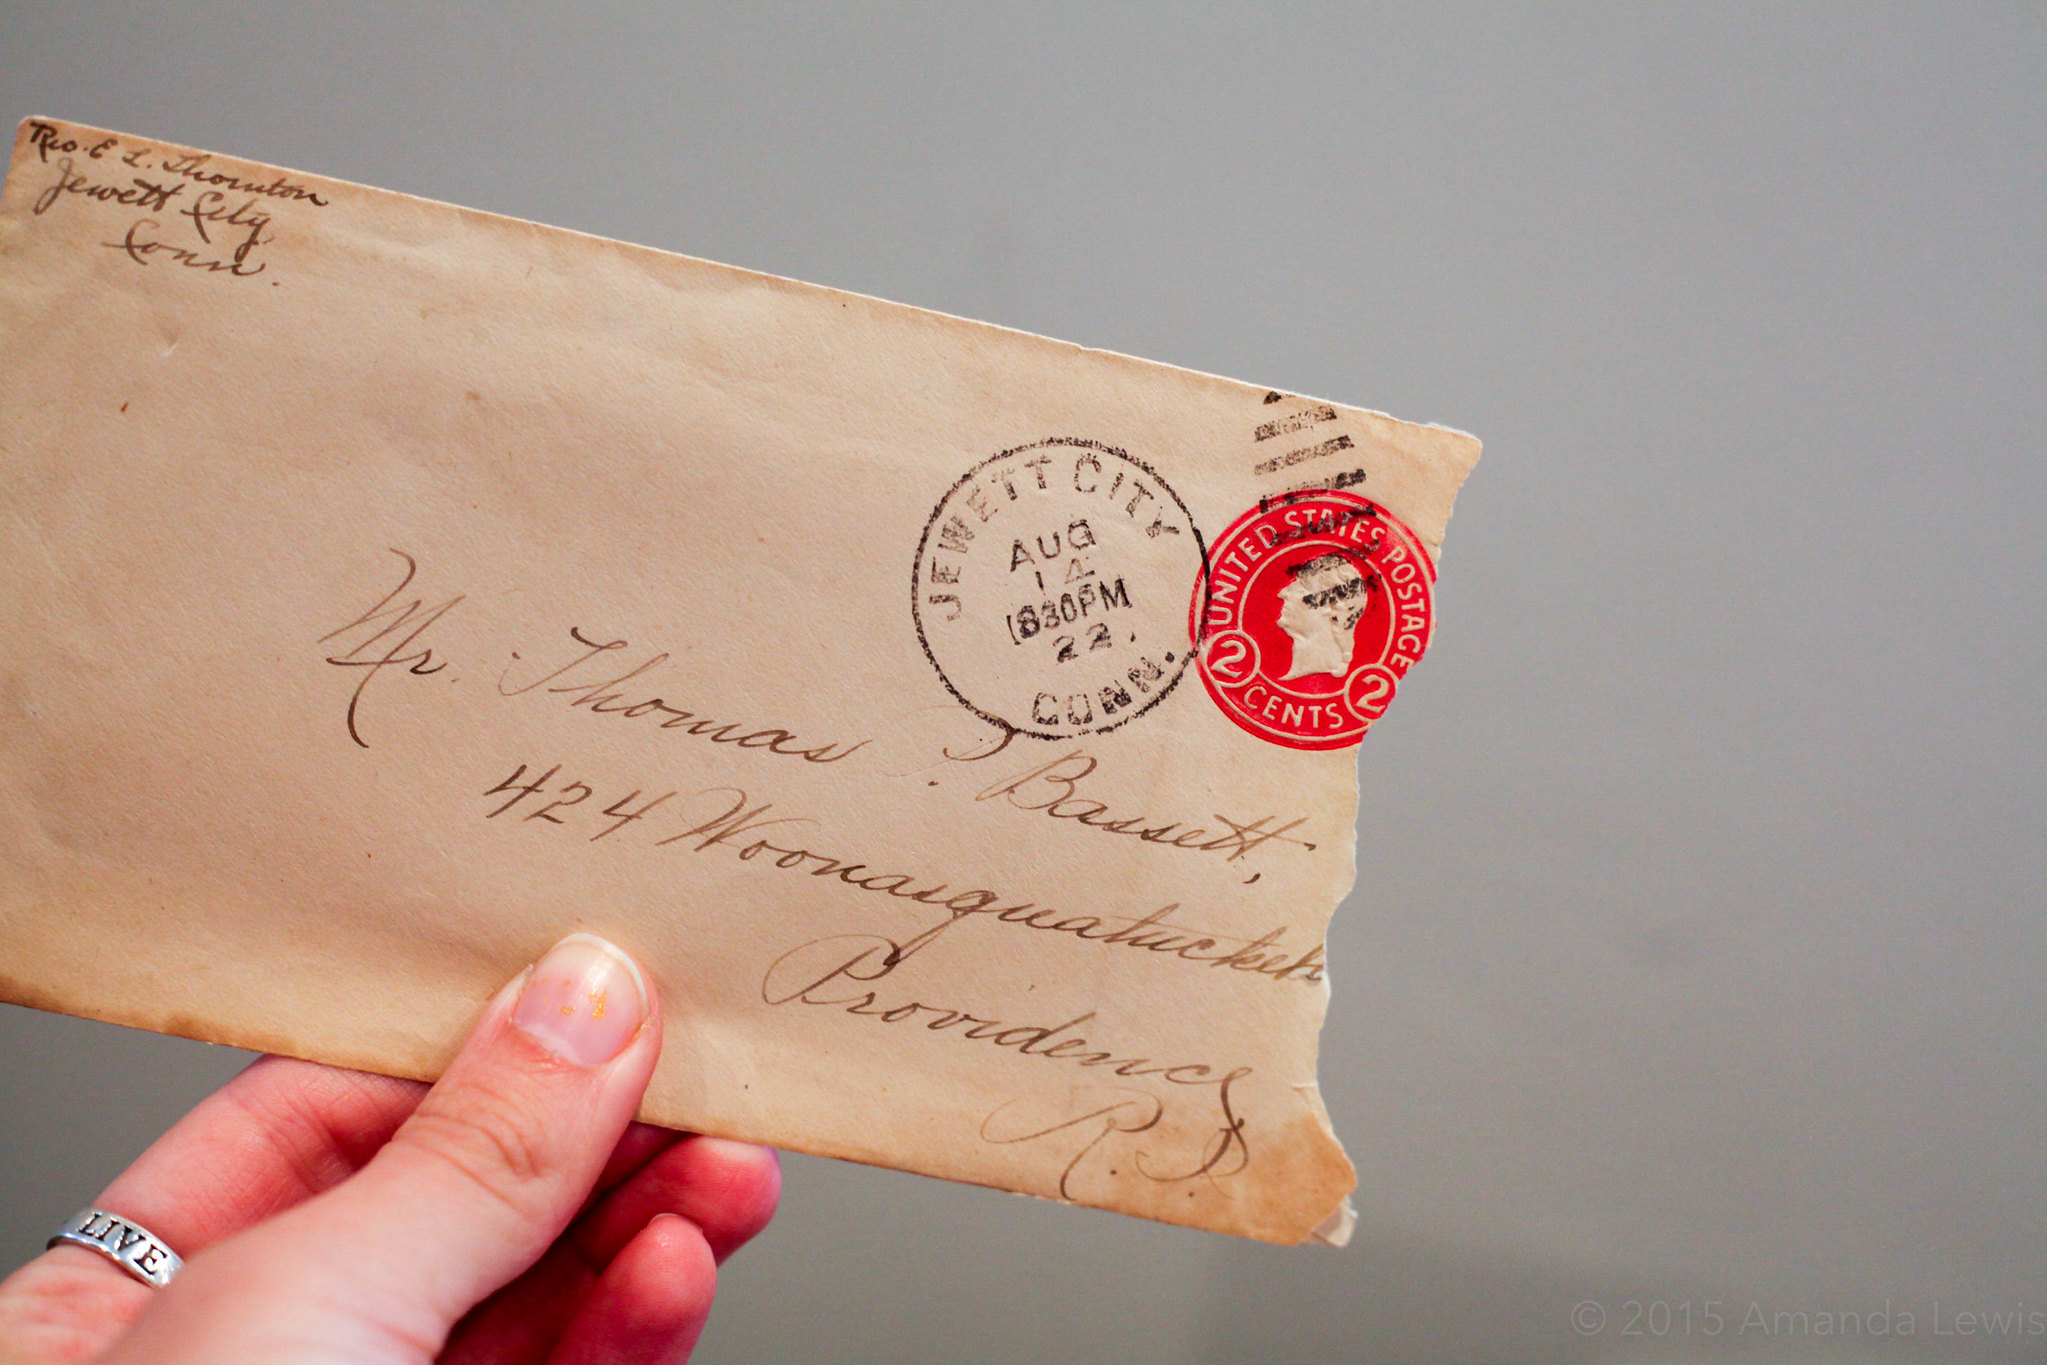 Aug 13 1922 Envelope